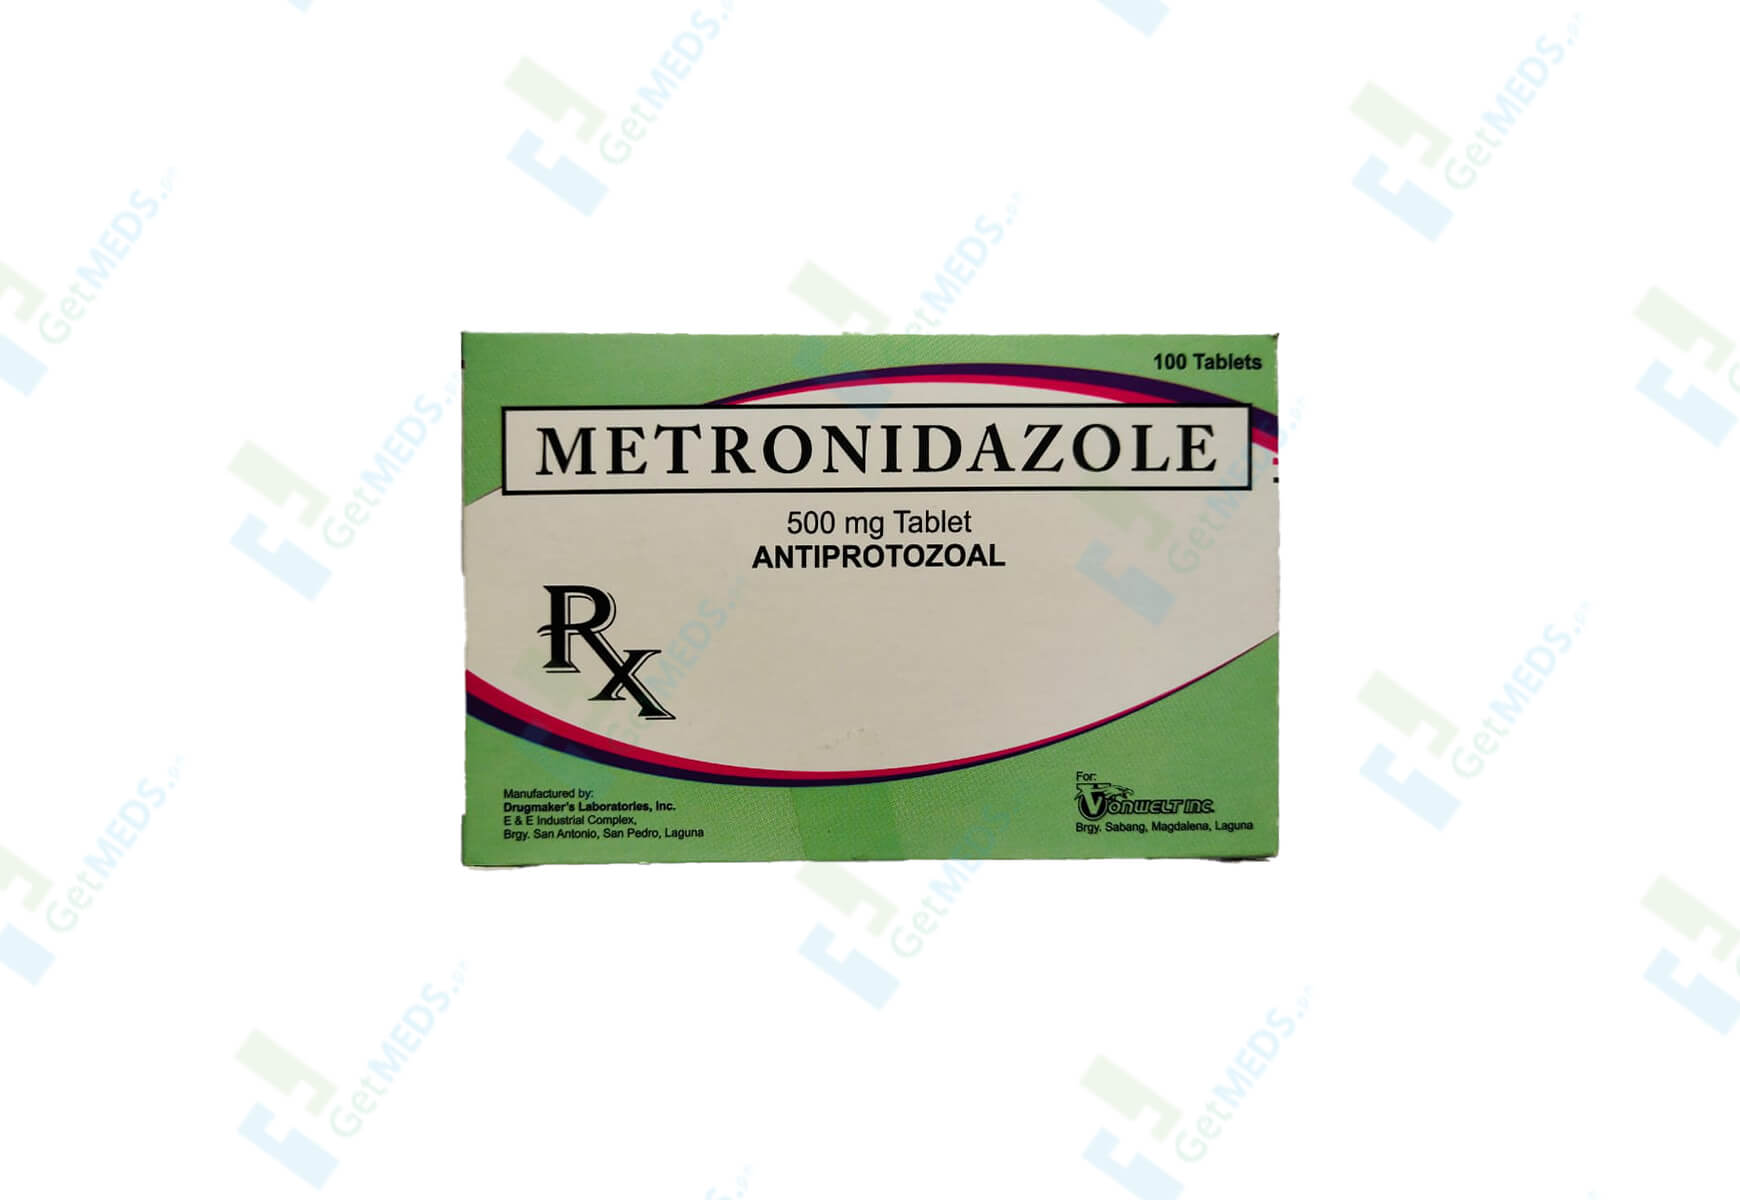 Drugmakers Metronidazole